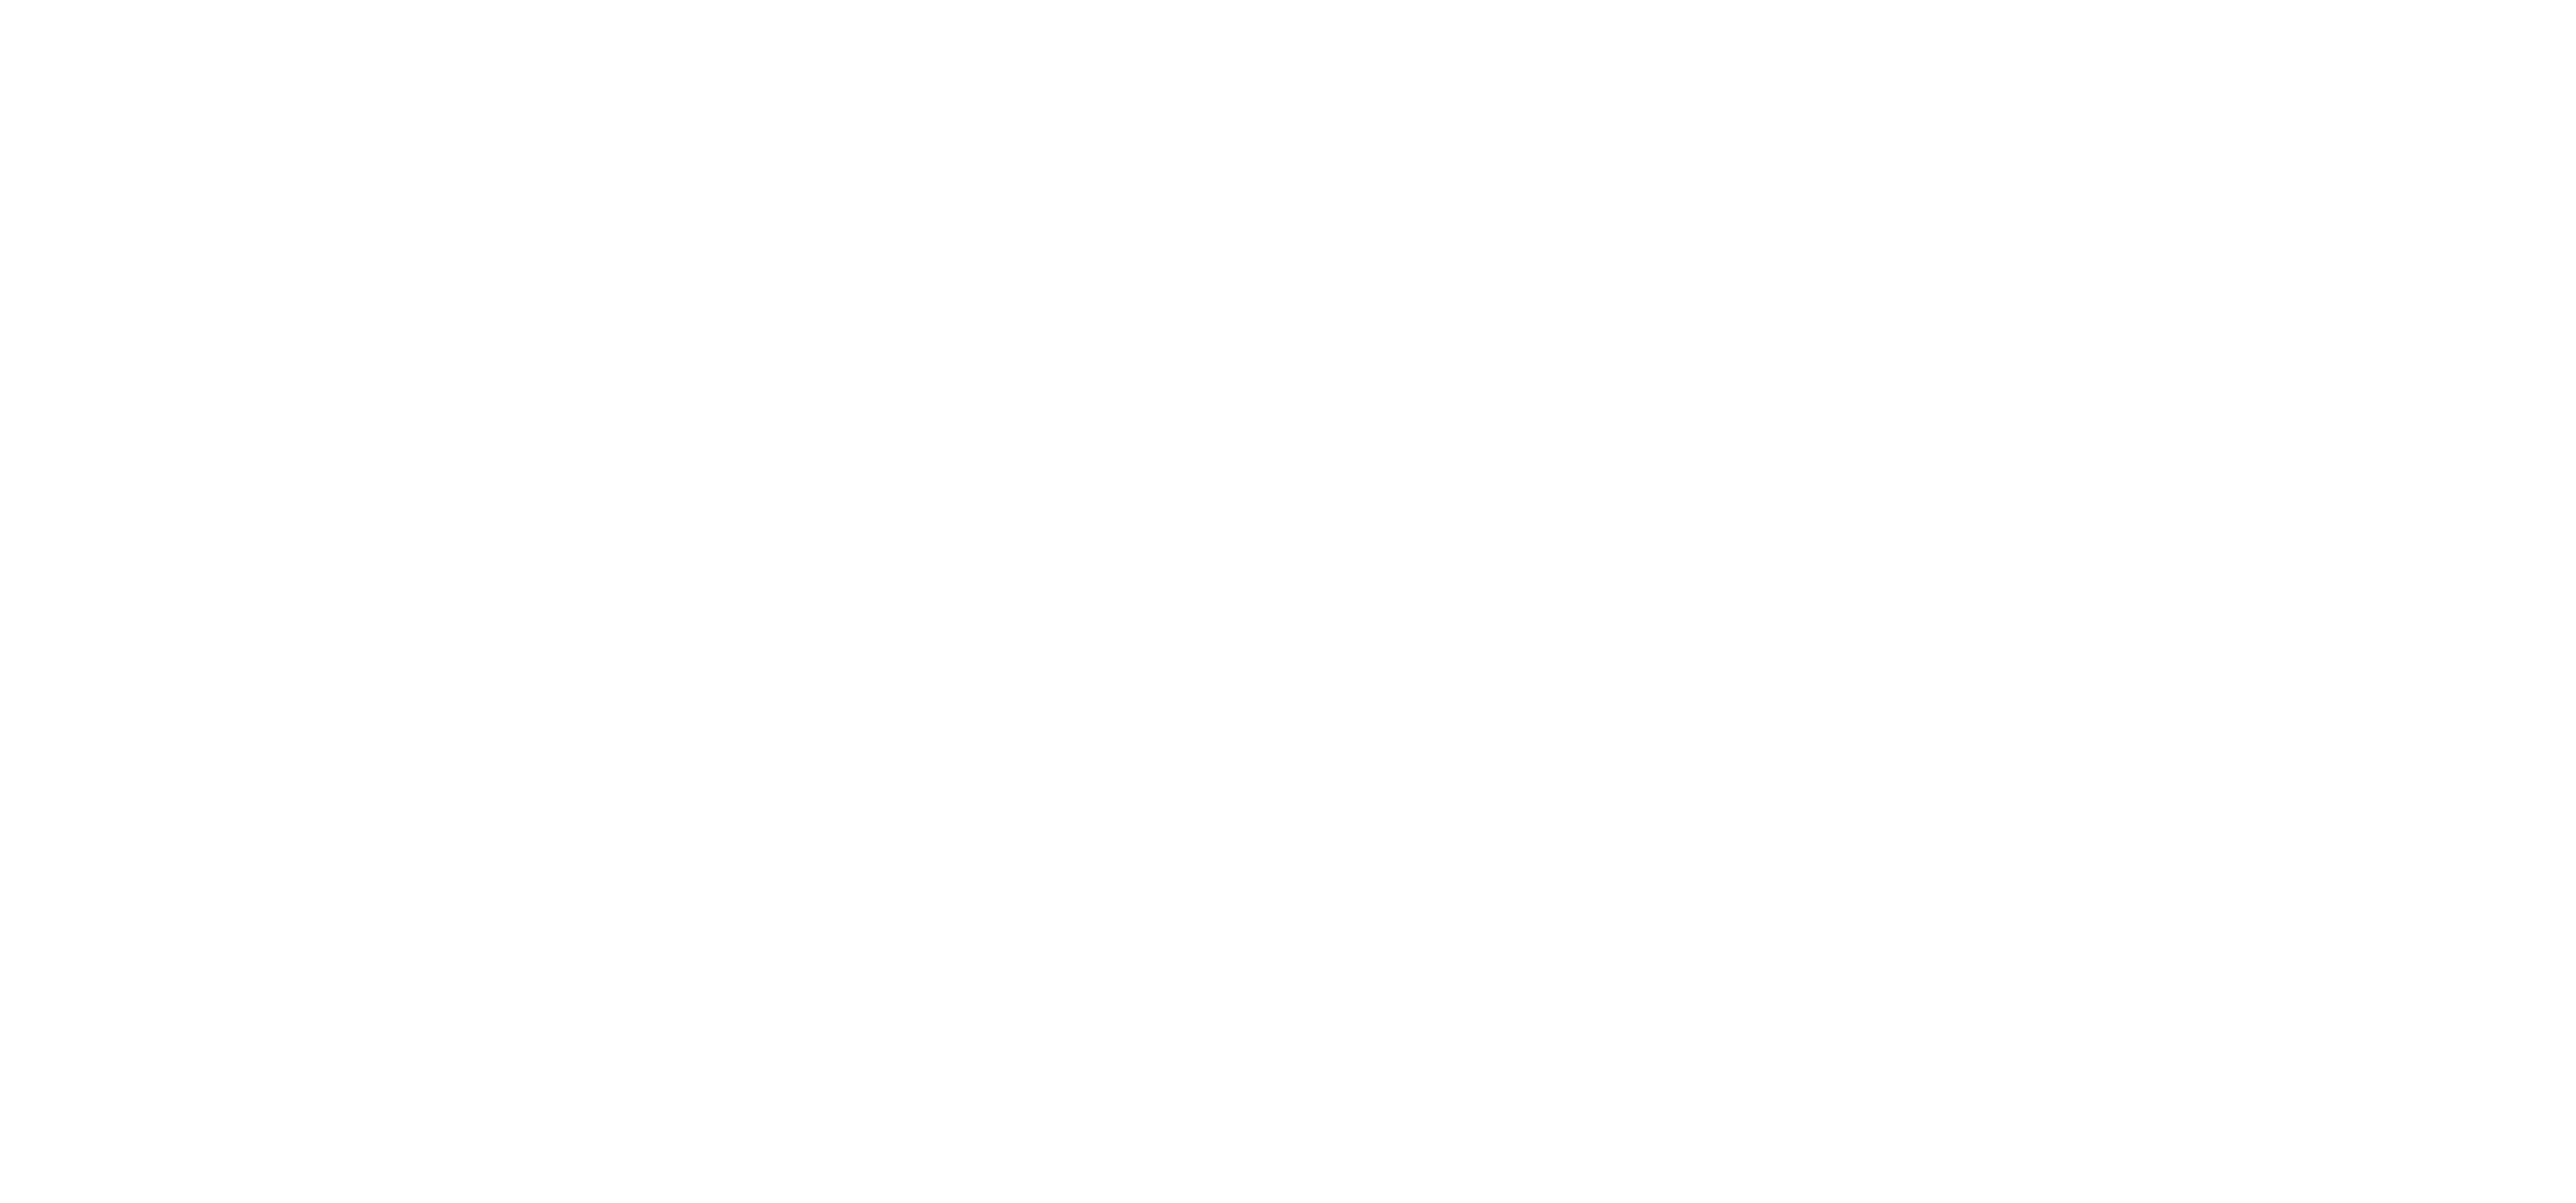 Colorado_ExpressLanes_Logo_White.png detail image